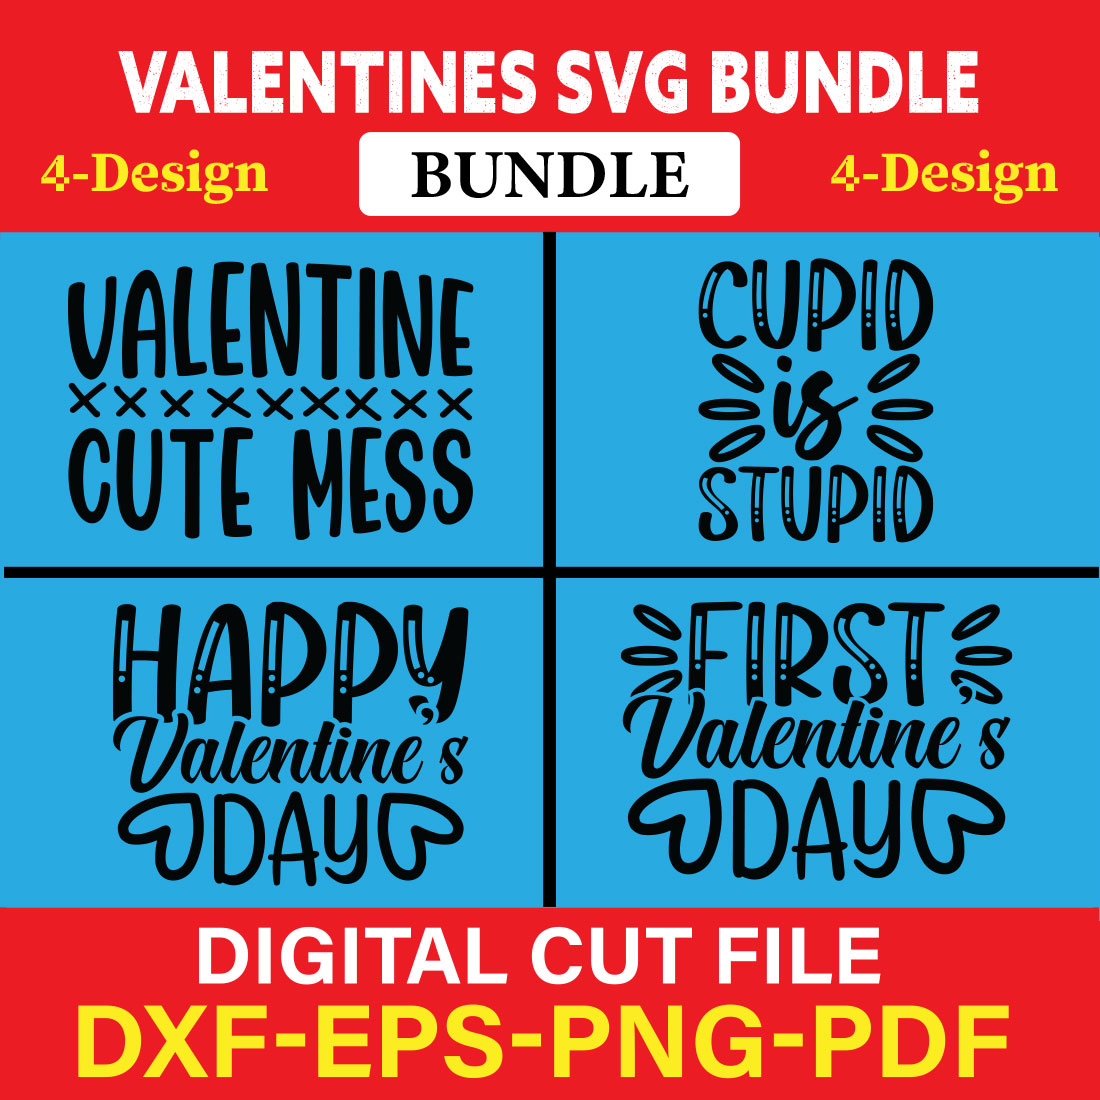 Valentines T-shirt Design Bundle Vol-39 cover image.